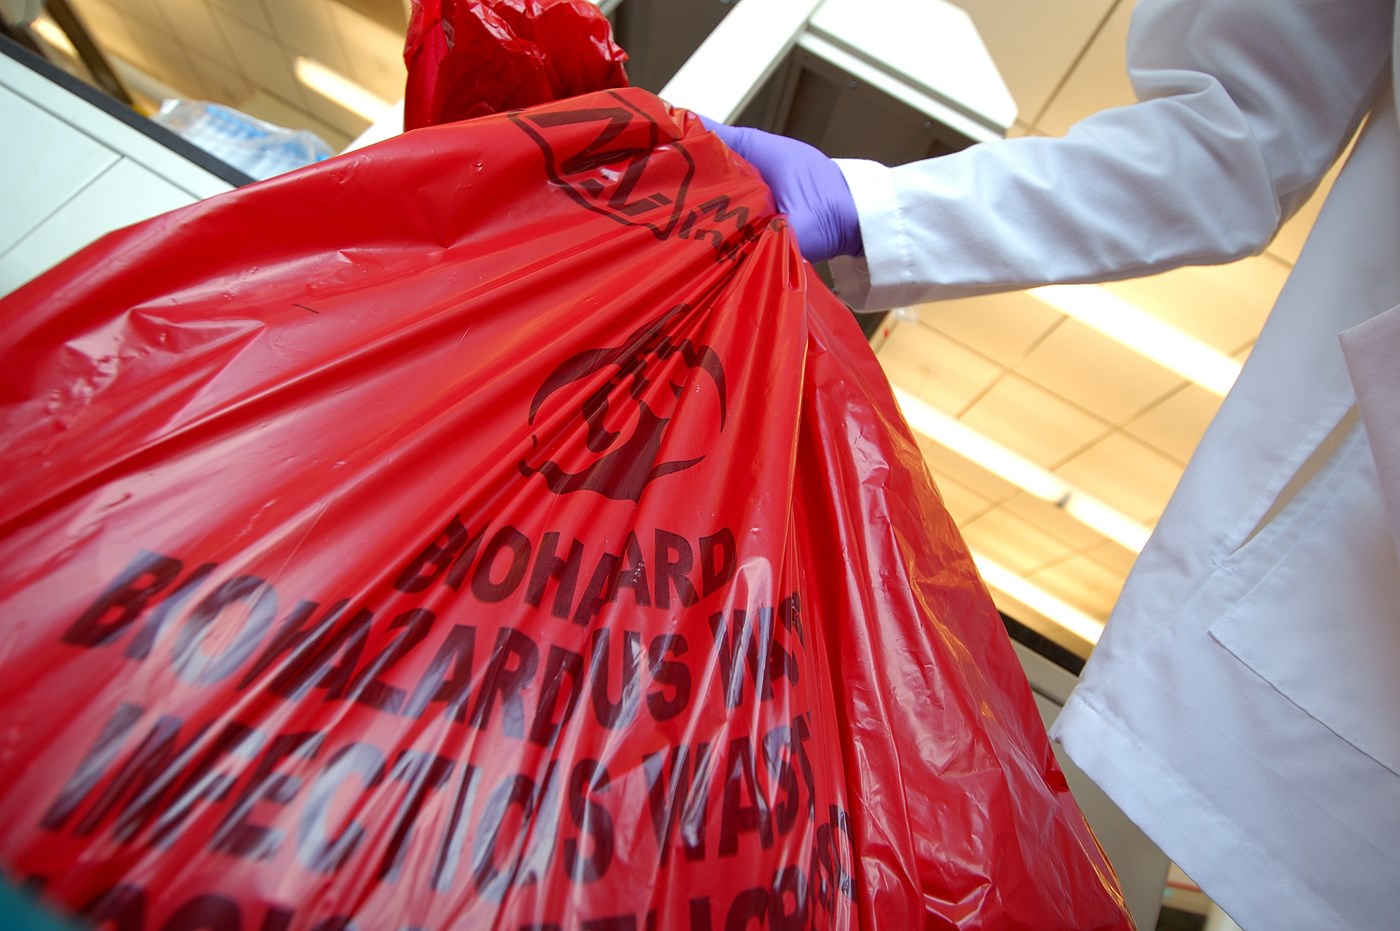 Gloved hand holding red biohazard waste bag